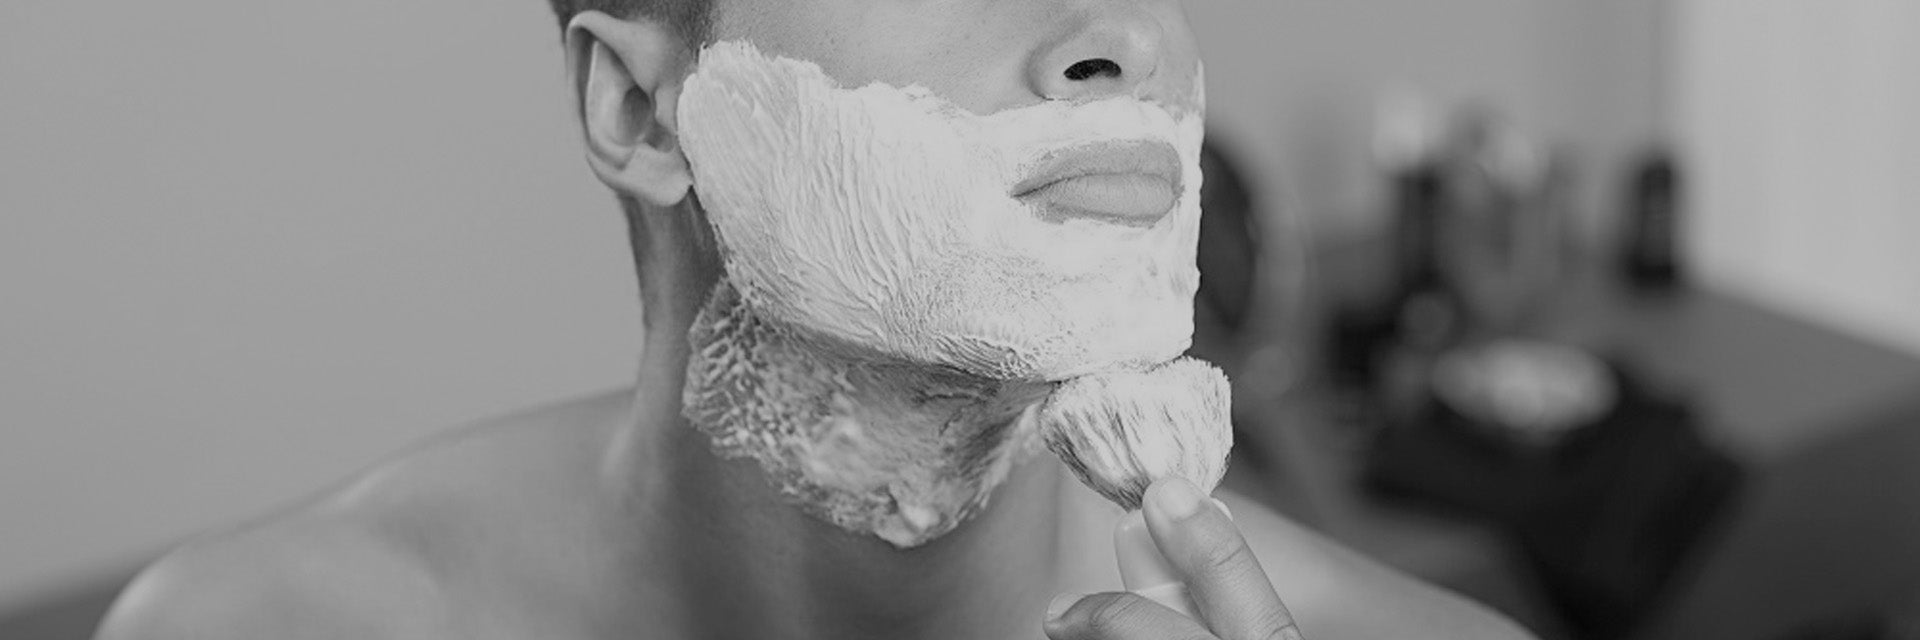 Shaving Cream & Soap